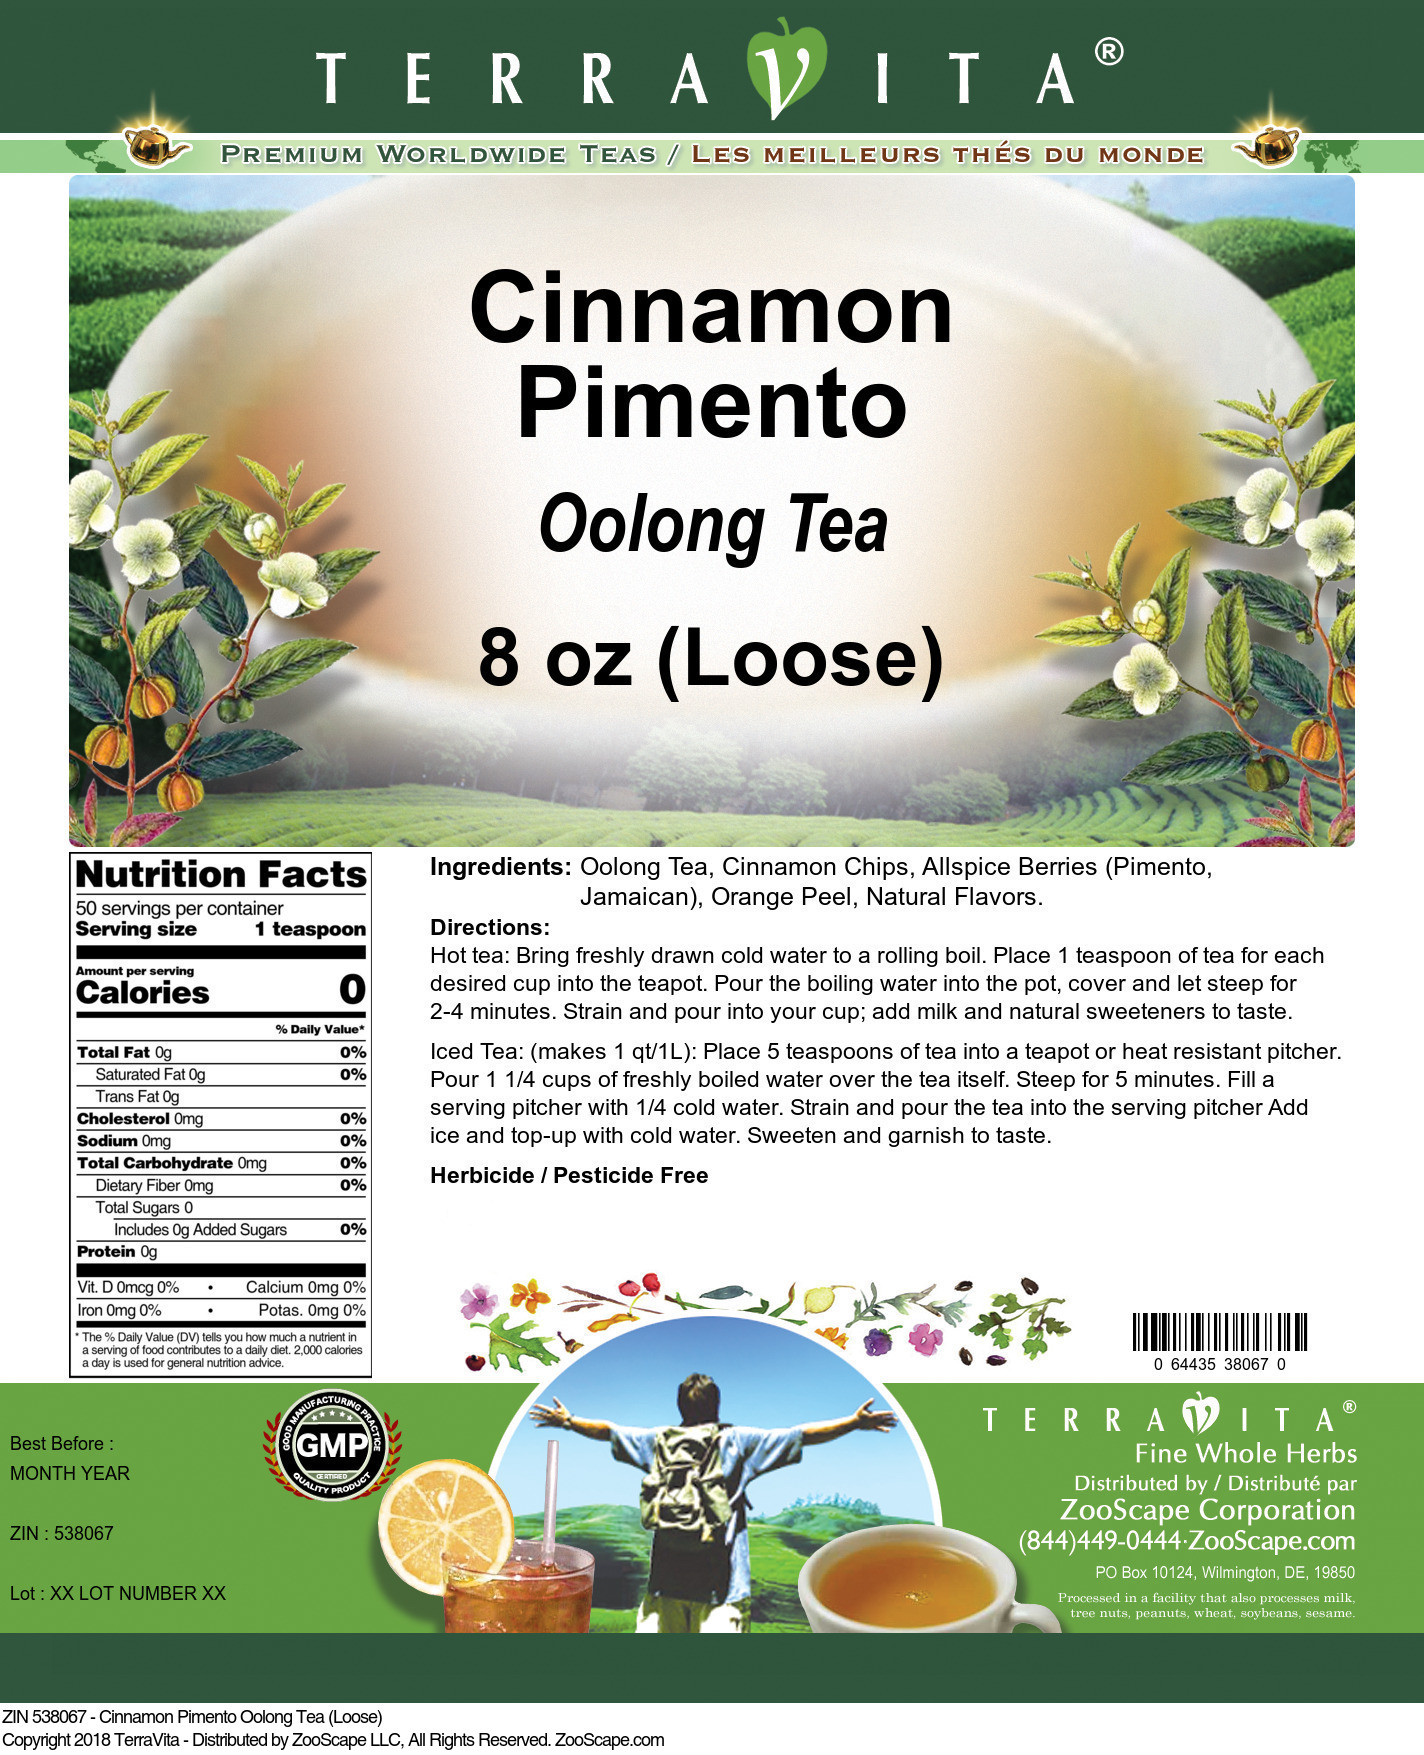 Cinnamon Pimento Oolong Tea (Loose) - Label